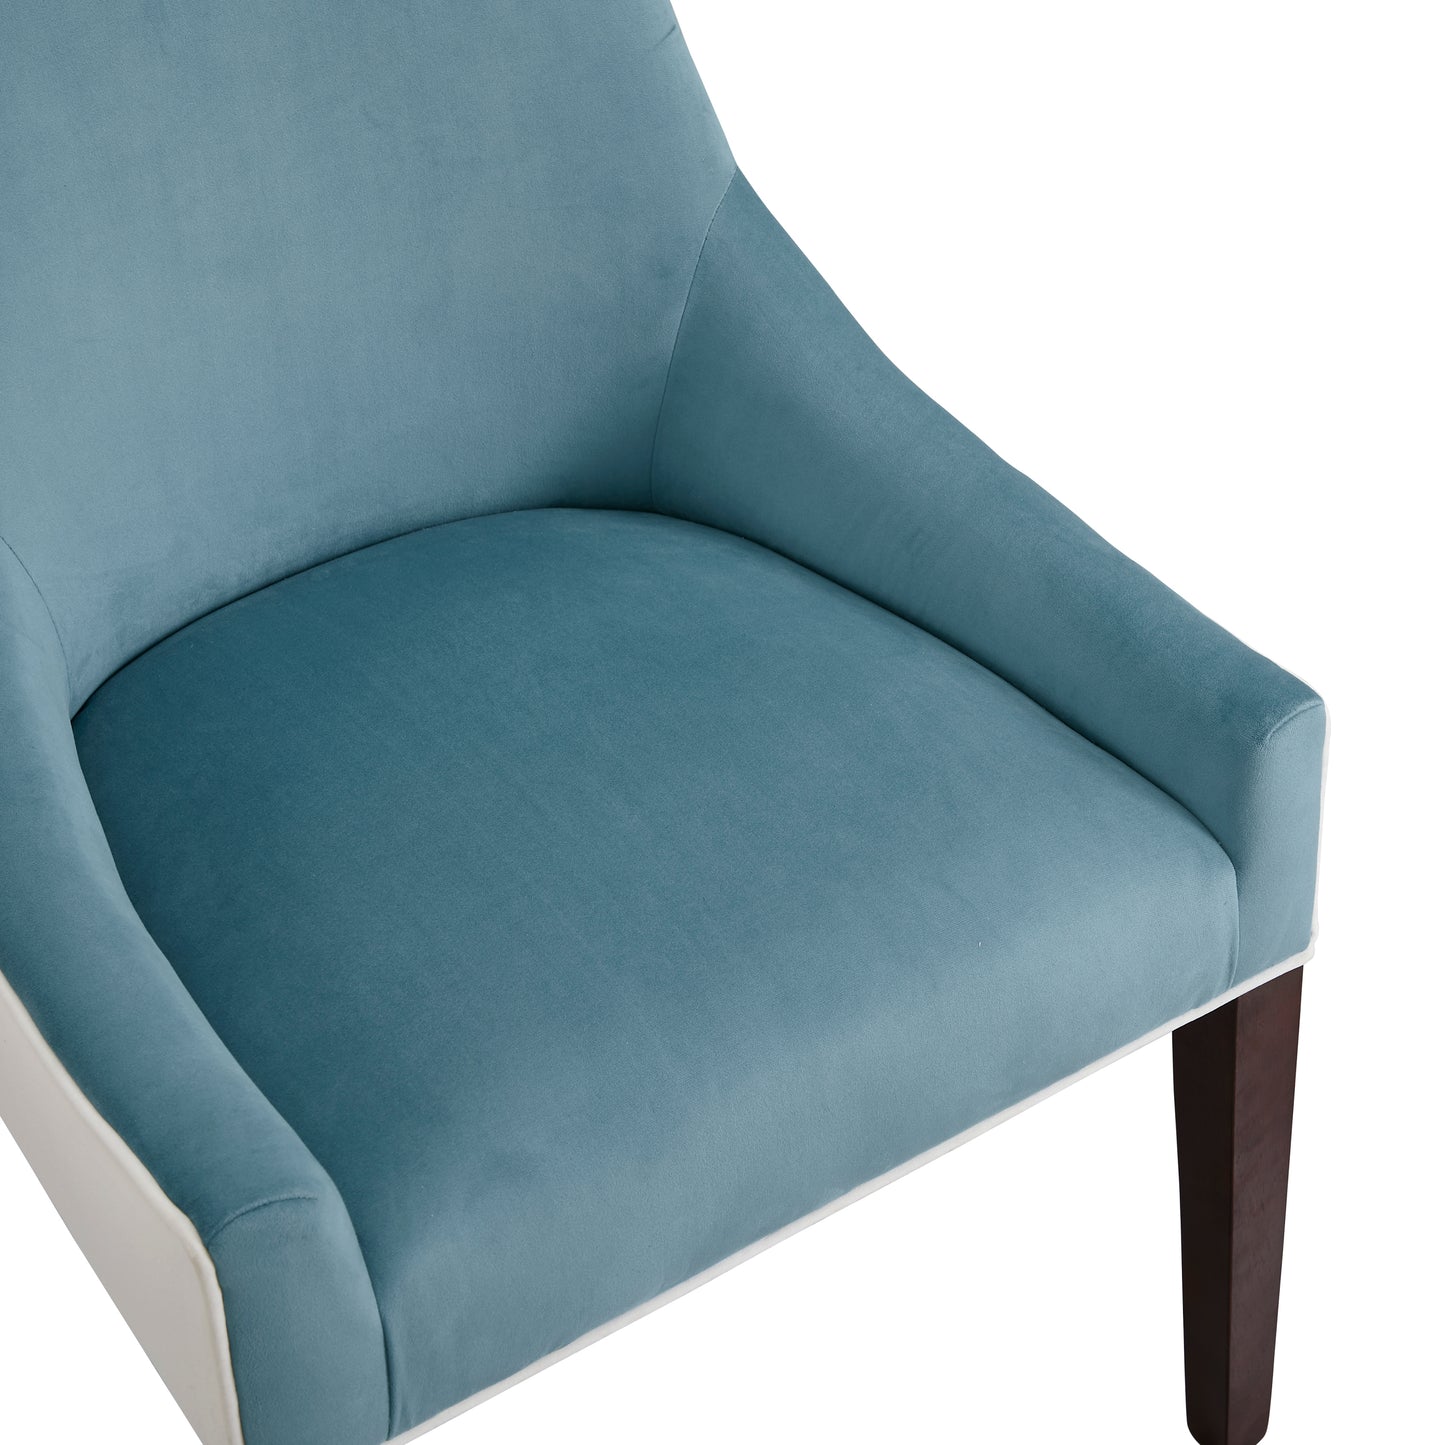 Jackson Designer Upholstered Dining Chair -Seafoam